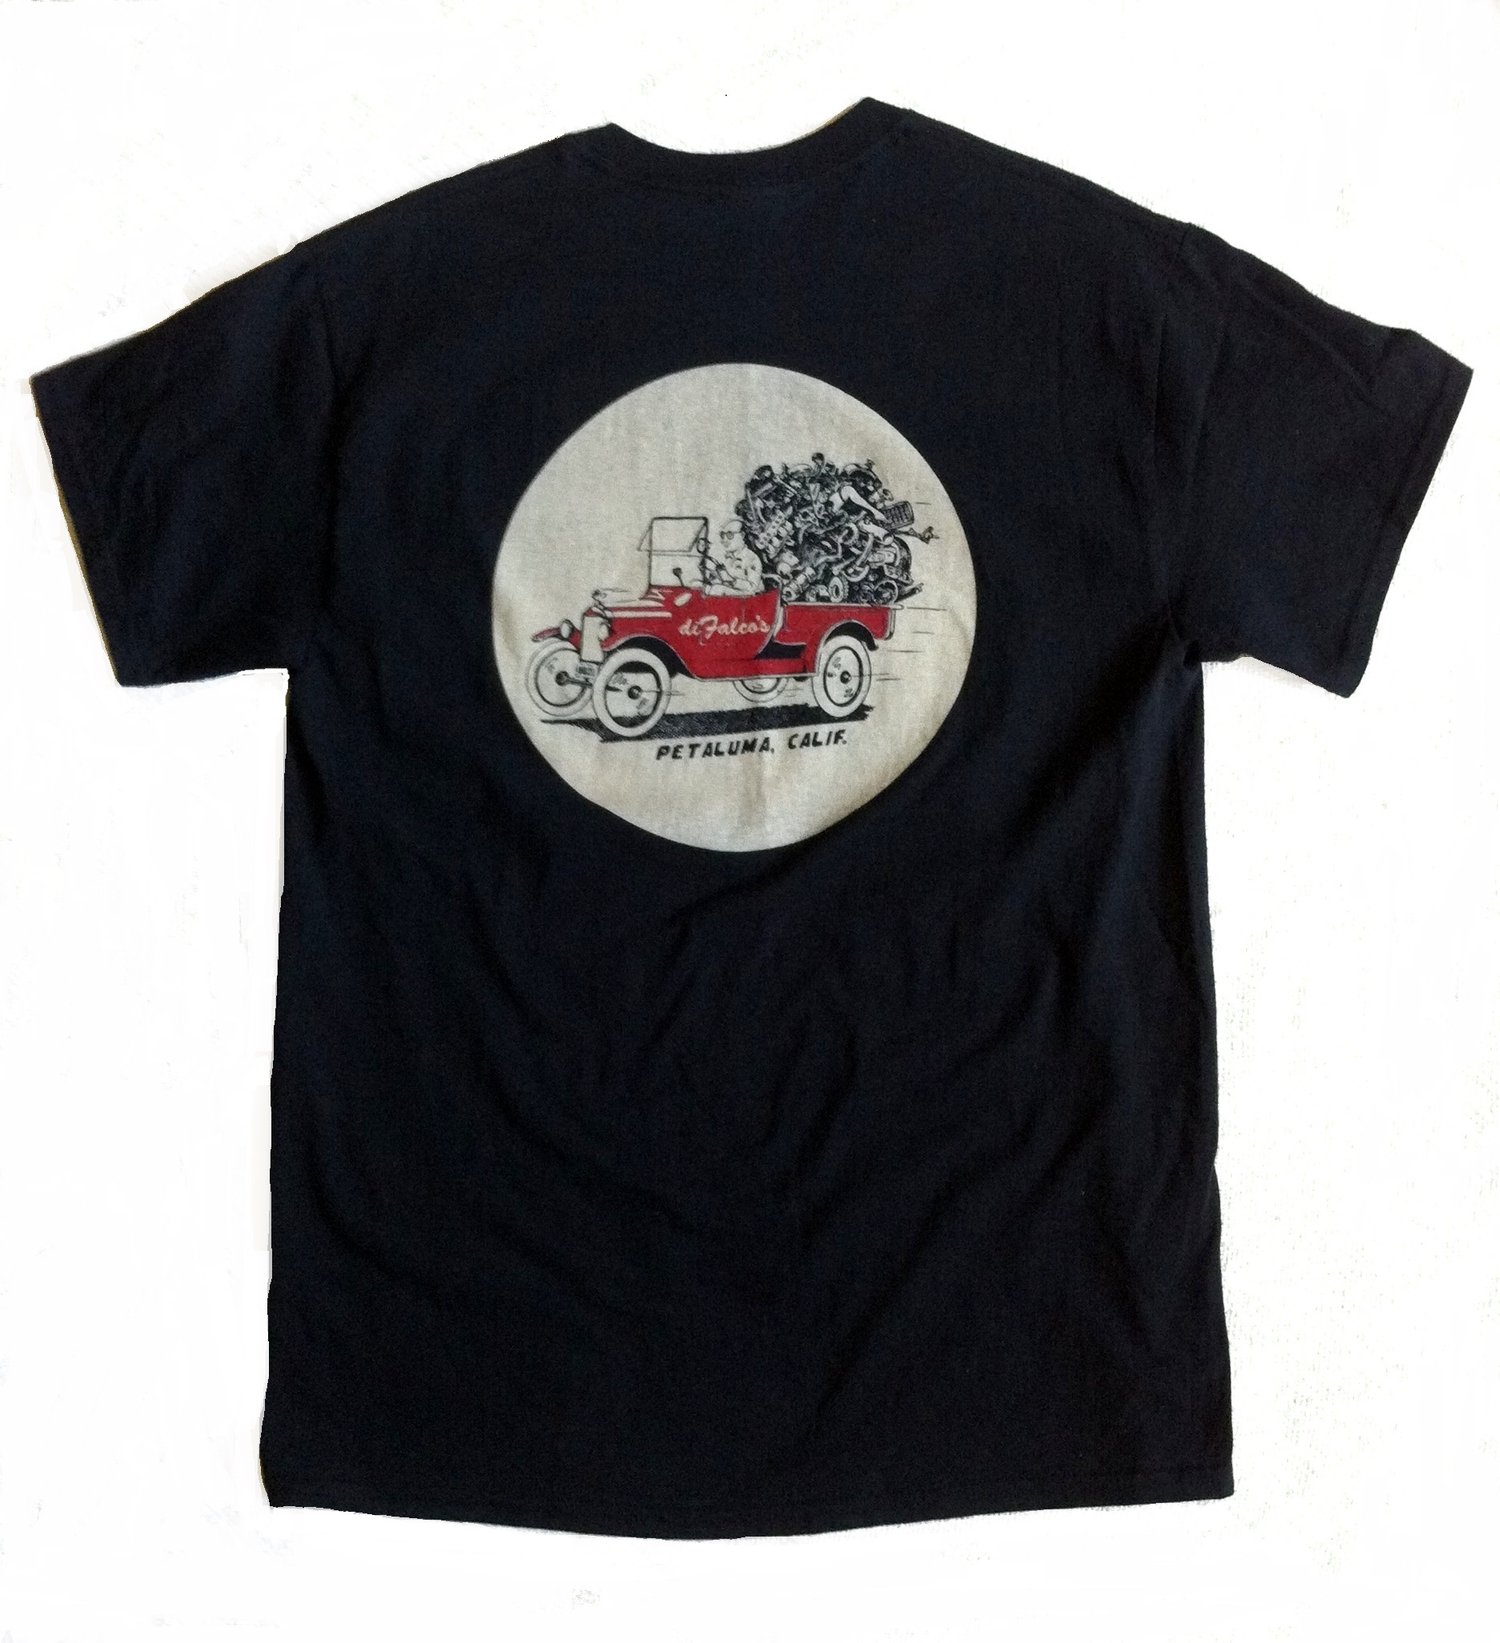 Image of Men's T-Shirt (Image shown is on back; logo on front)